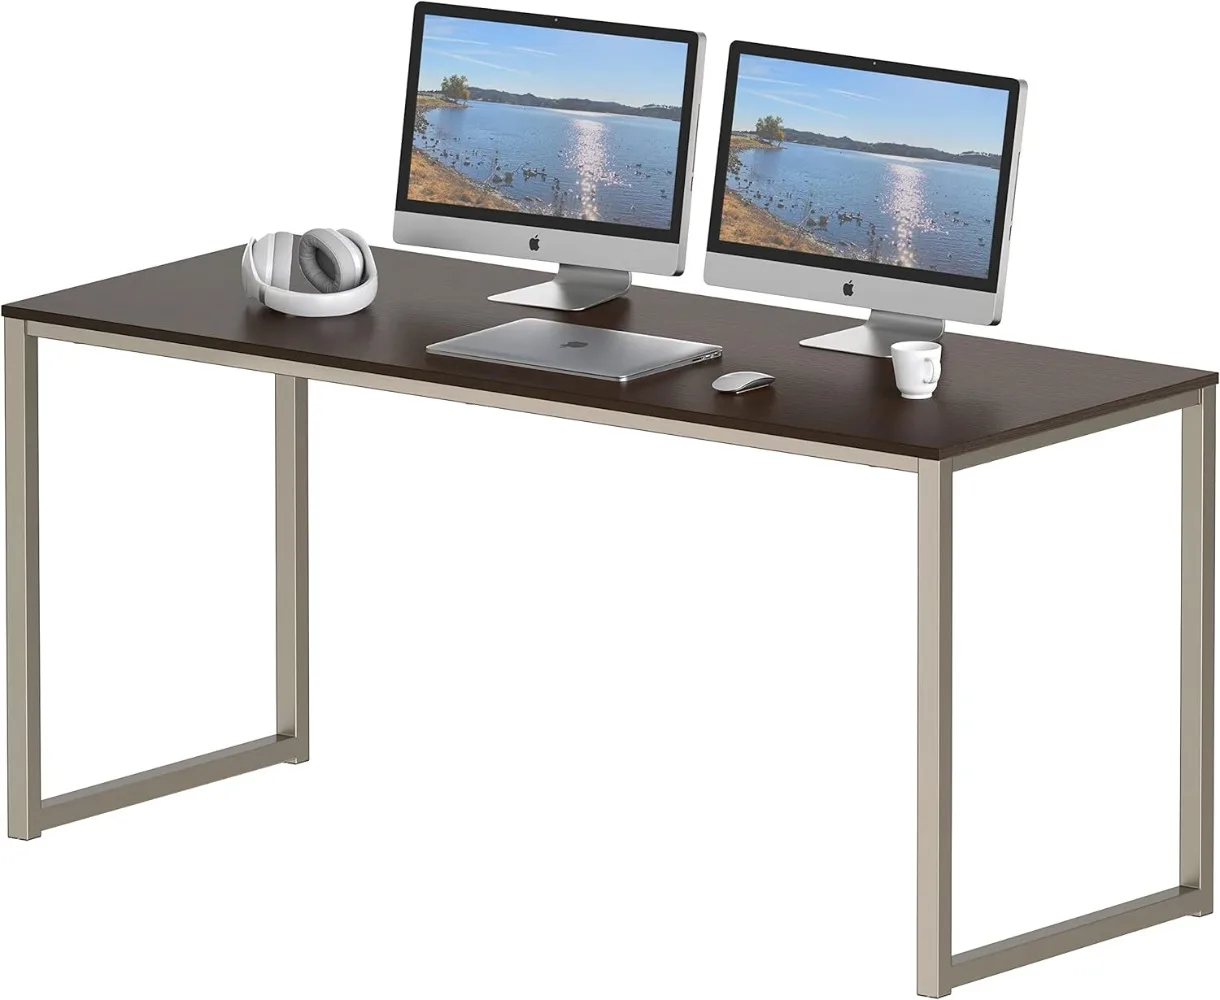 

SHW Home Office 55-Inch Computer Desk, 24" Deep, Espresso